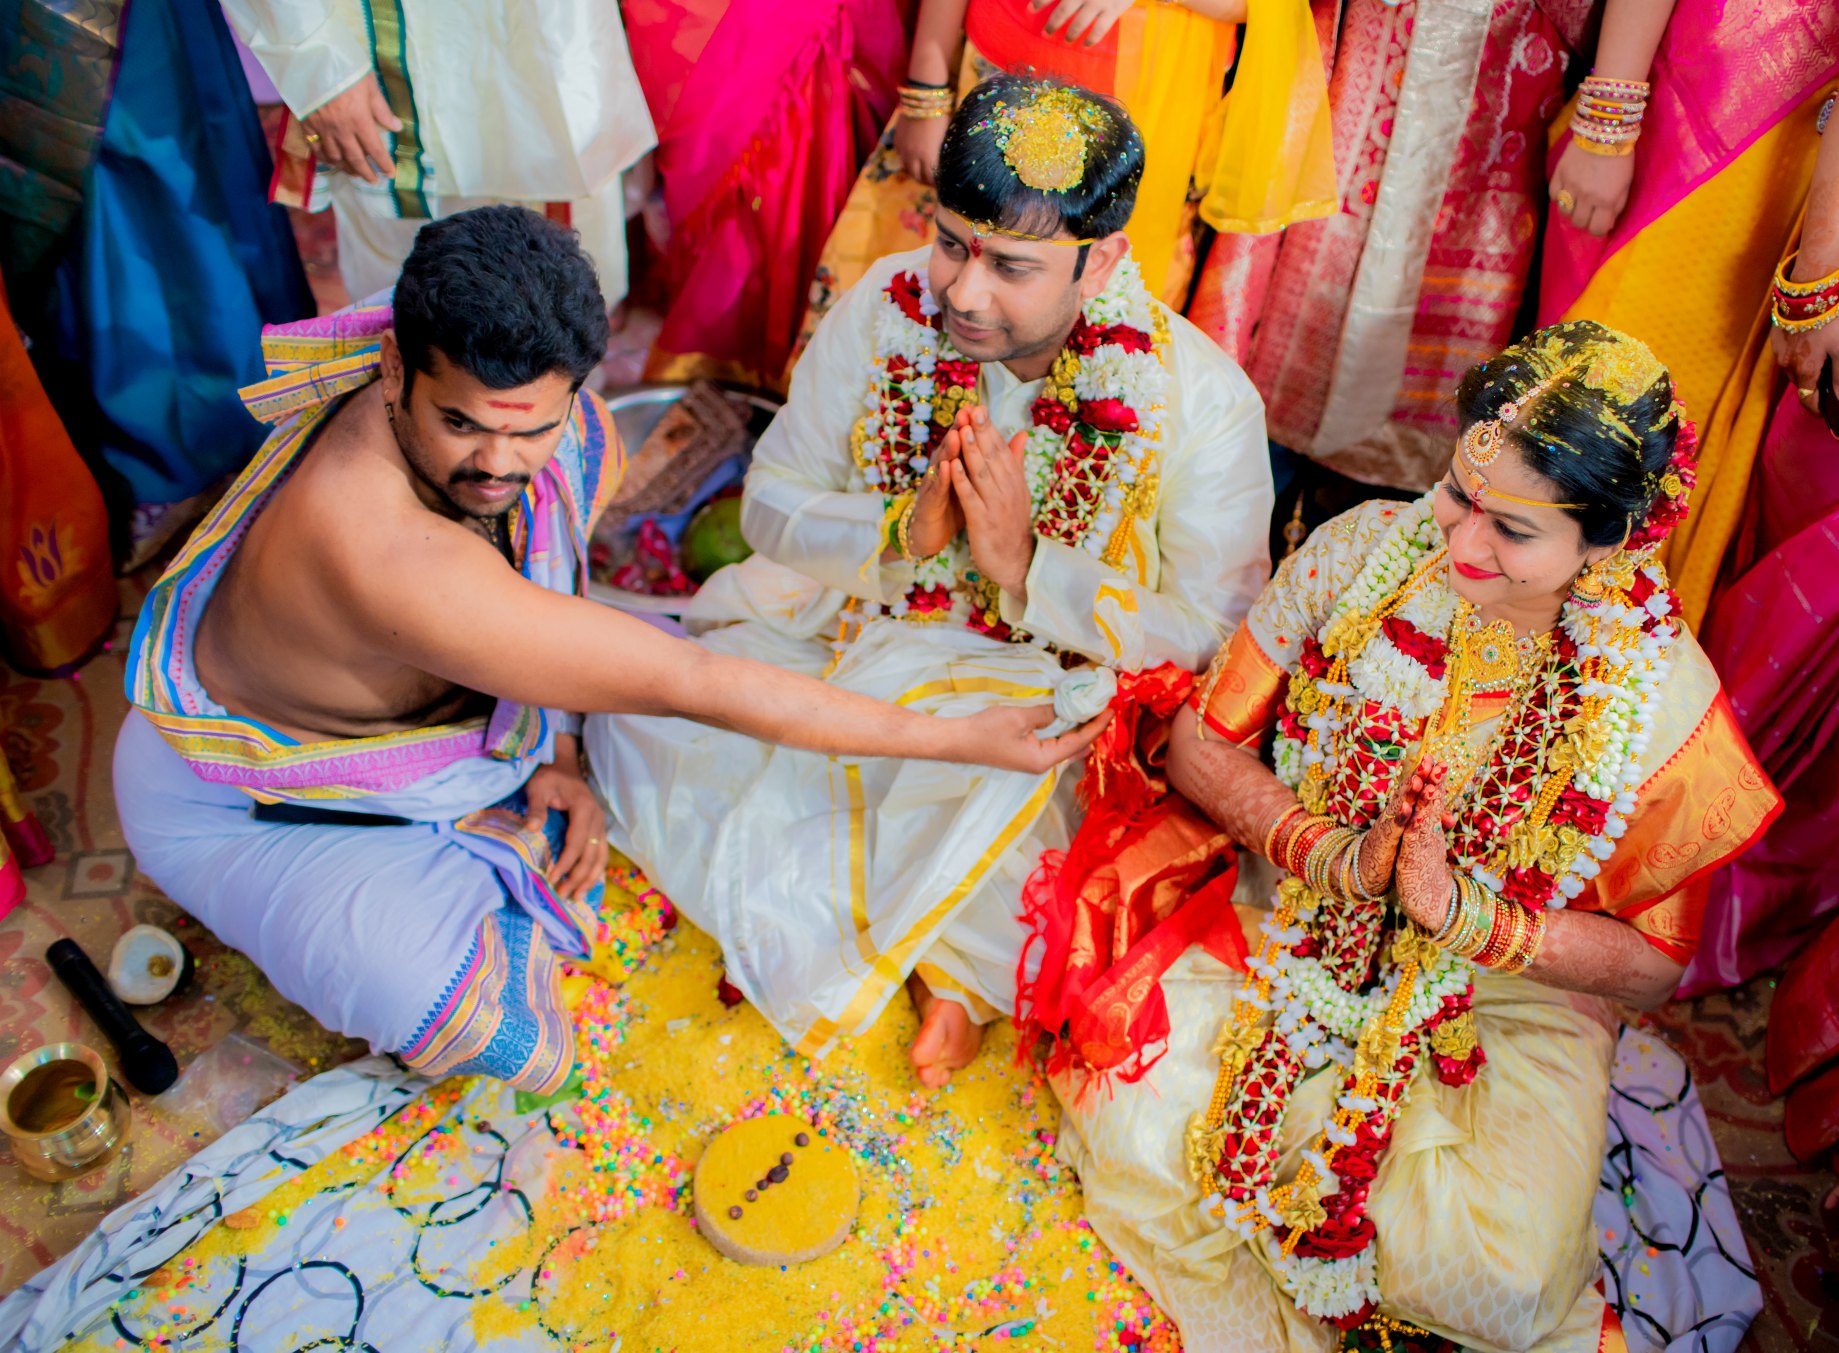 Indian Traditional Wedding Ceremony 14 Hindu Wedding Ceremony Traditions You Need To Know The